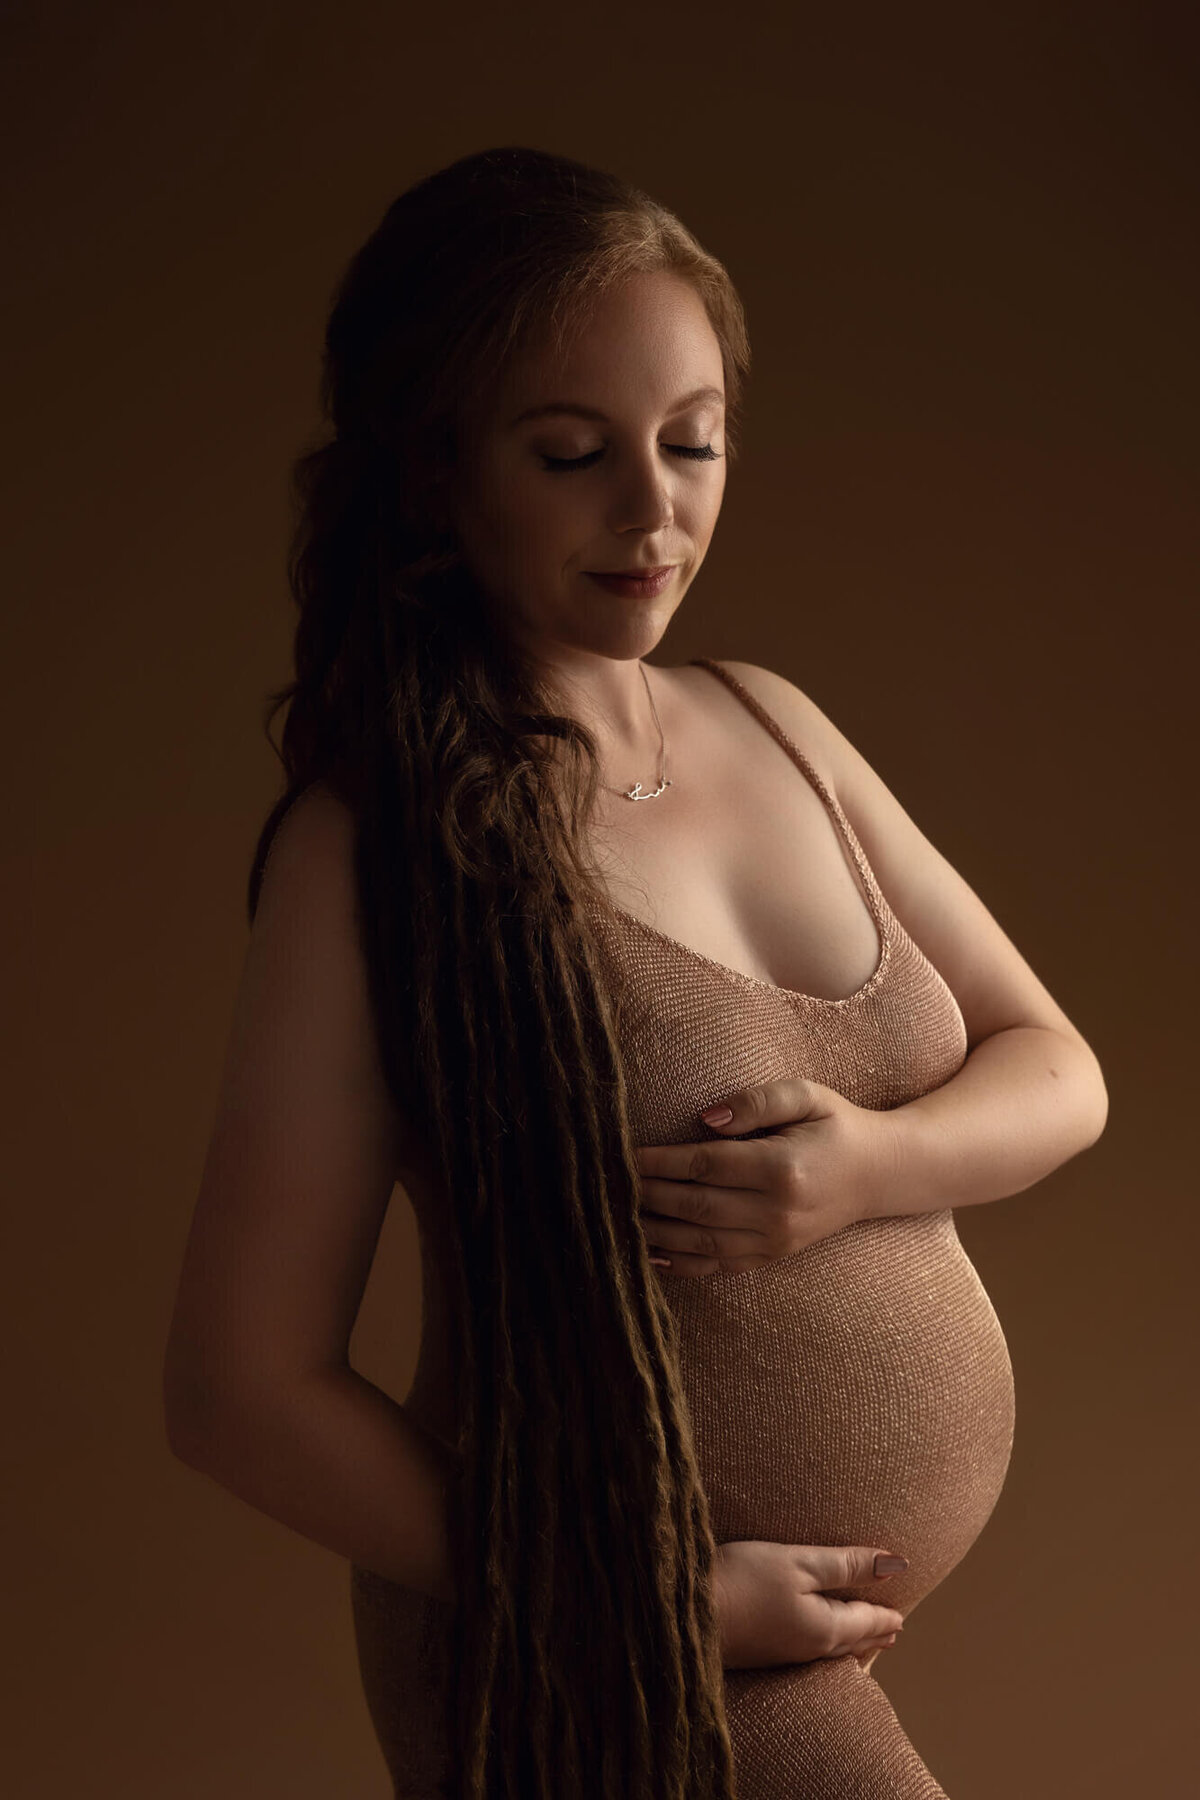 Philadelphia maternity photographer, maternity photography in Philadelphia, maternity portraits Philadelphia, professional maternity photos